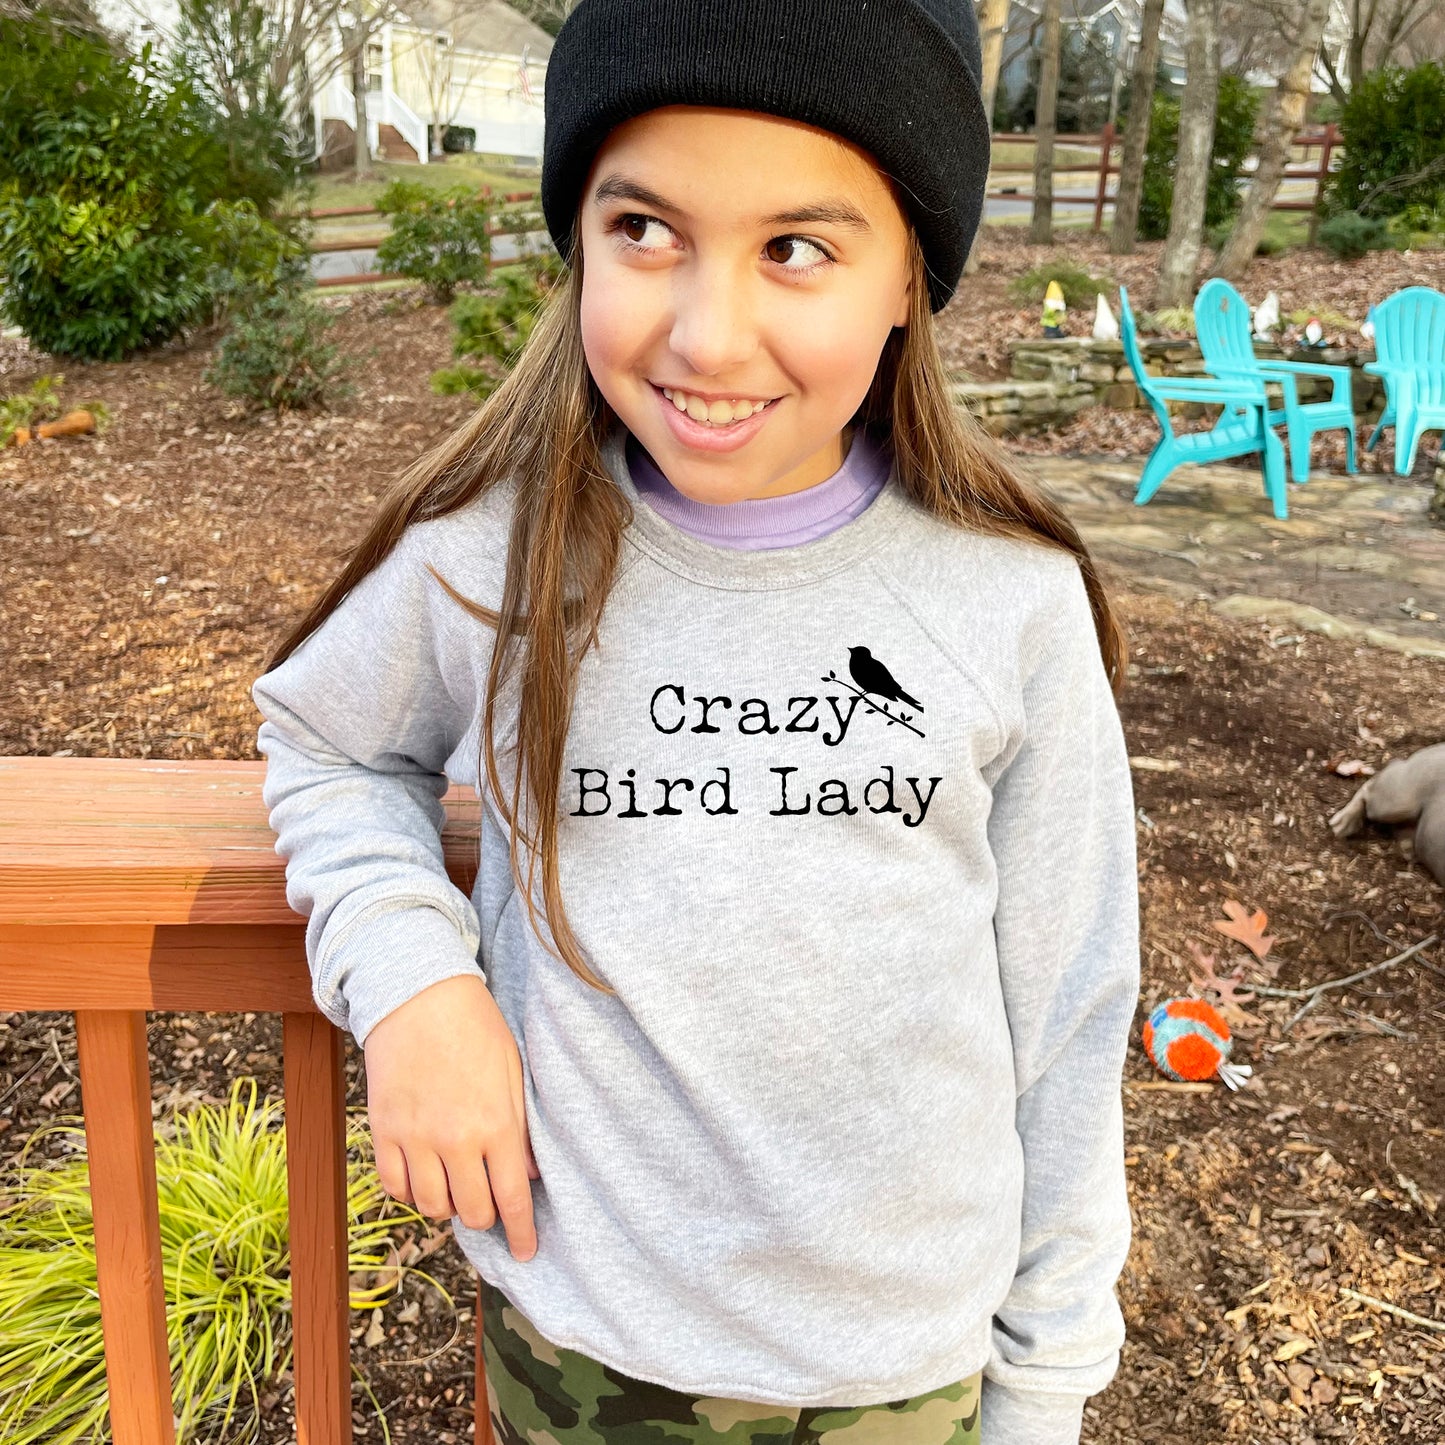 Crazy Bird Lady - Kid's Sweatshirt - Heather Gray or Mauve